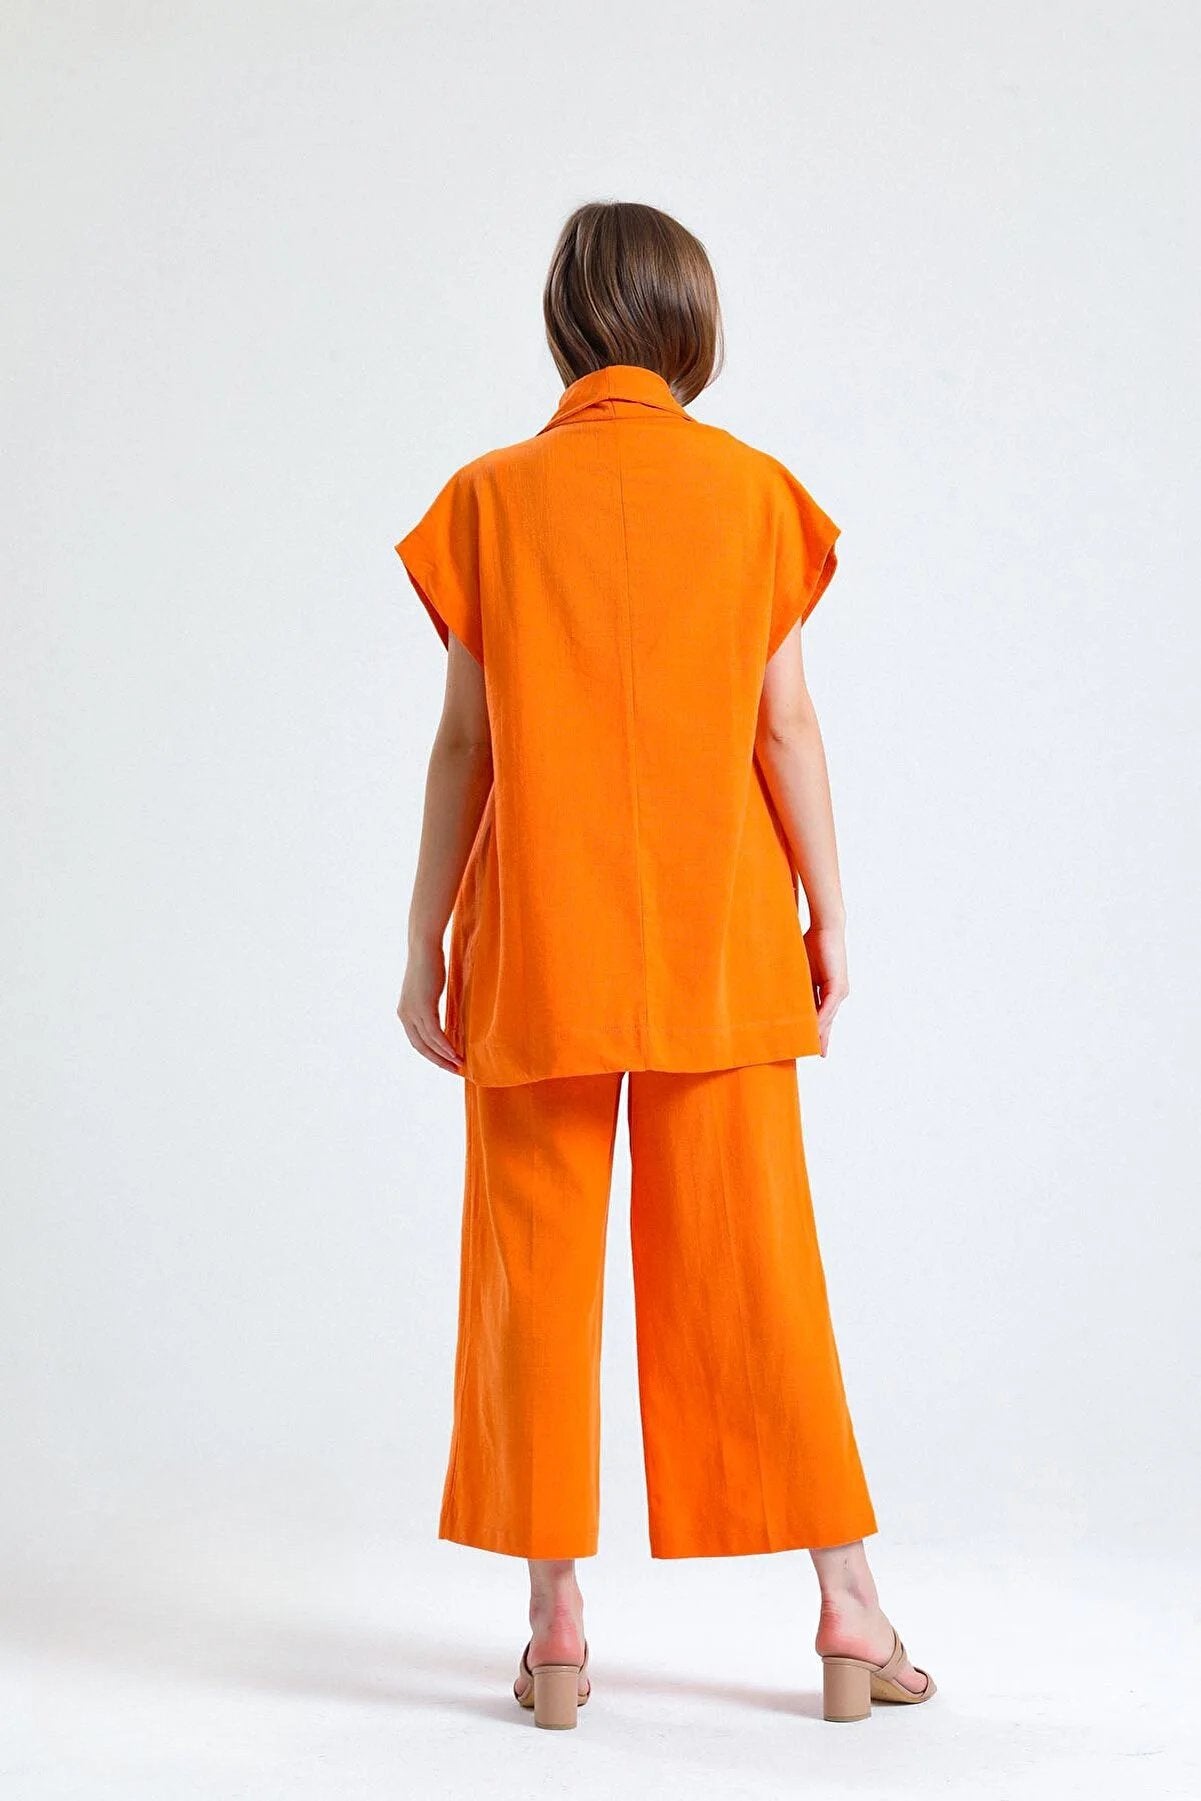 100% Organic Linen Fabric Coat with Belt - Orange - Jacket - LussoCA